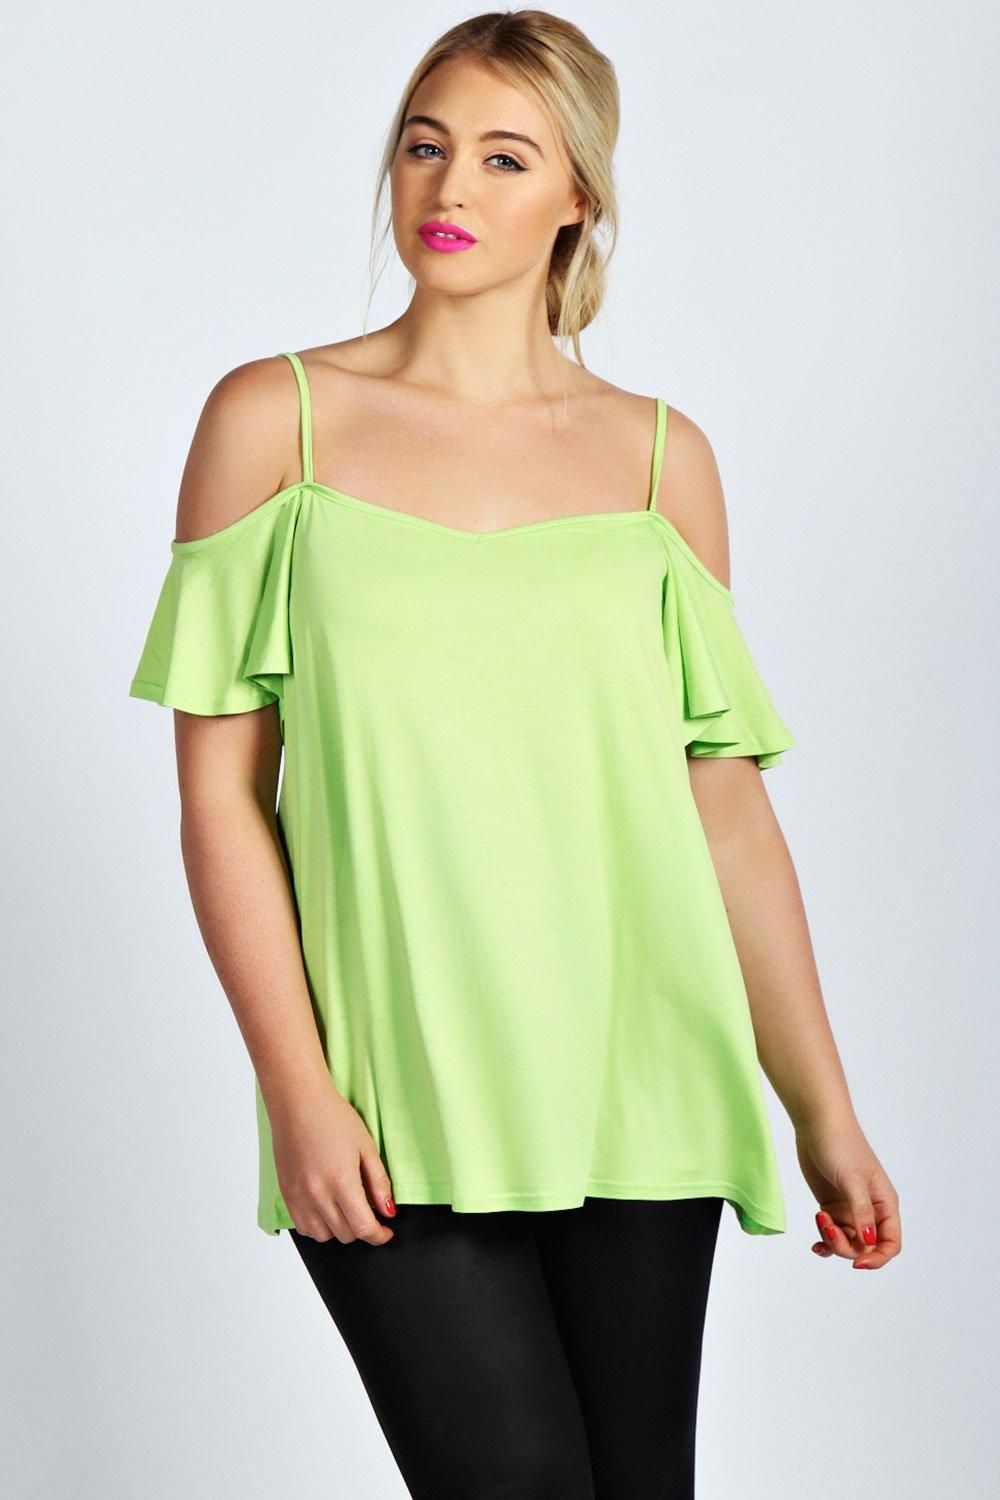 Boohoo Womens Ladies Amy Frill Sleeve Swing Plus Size Top | eBay